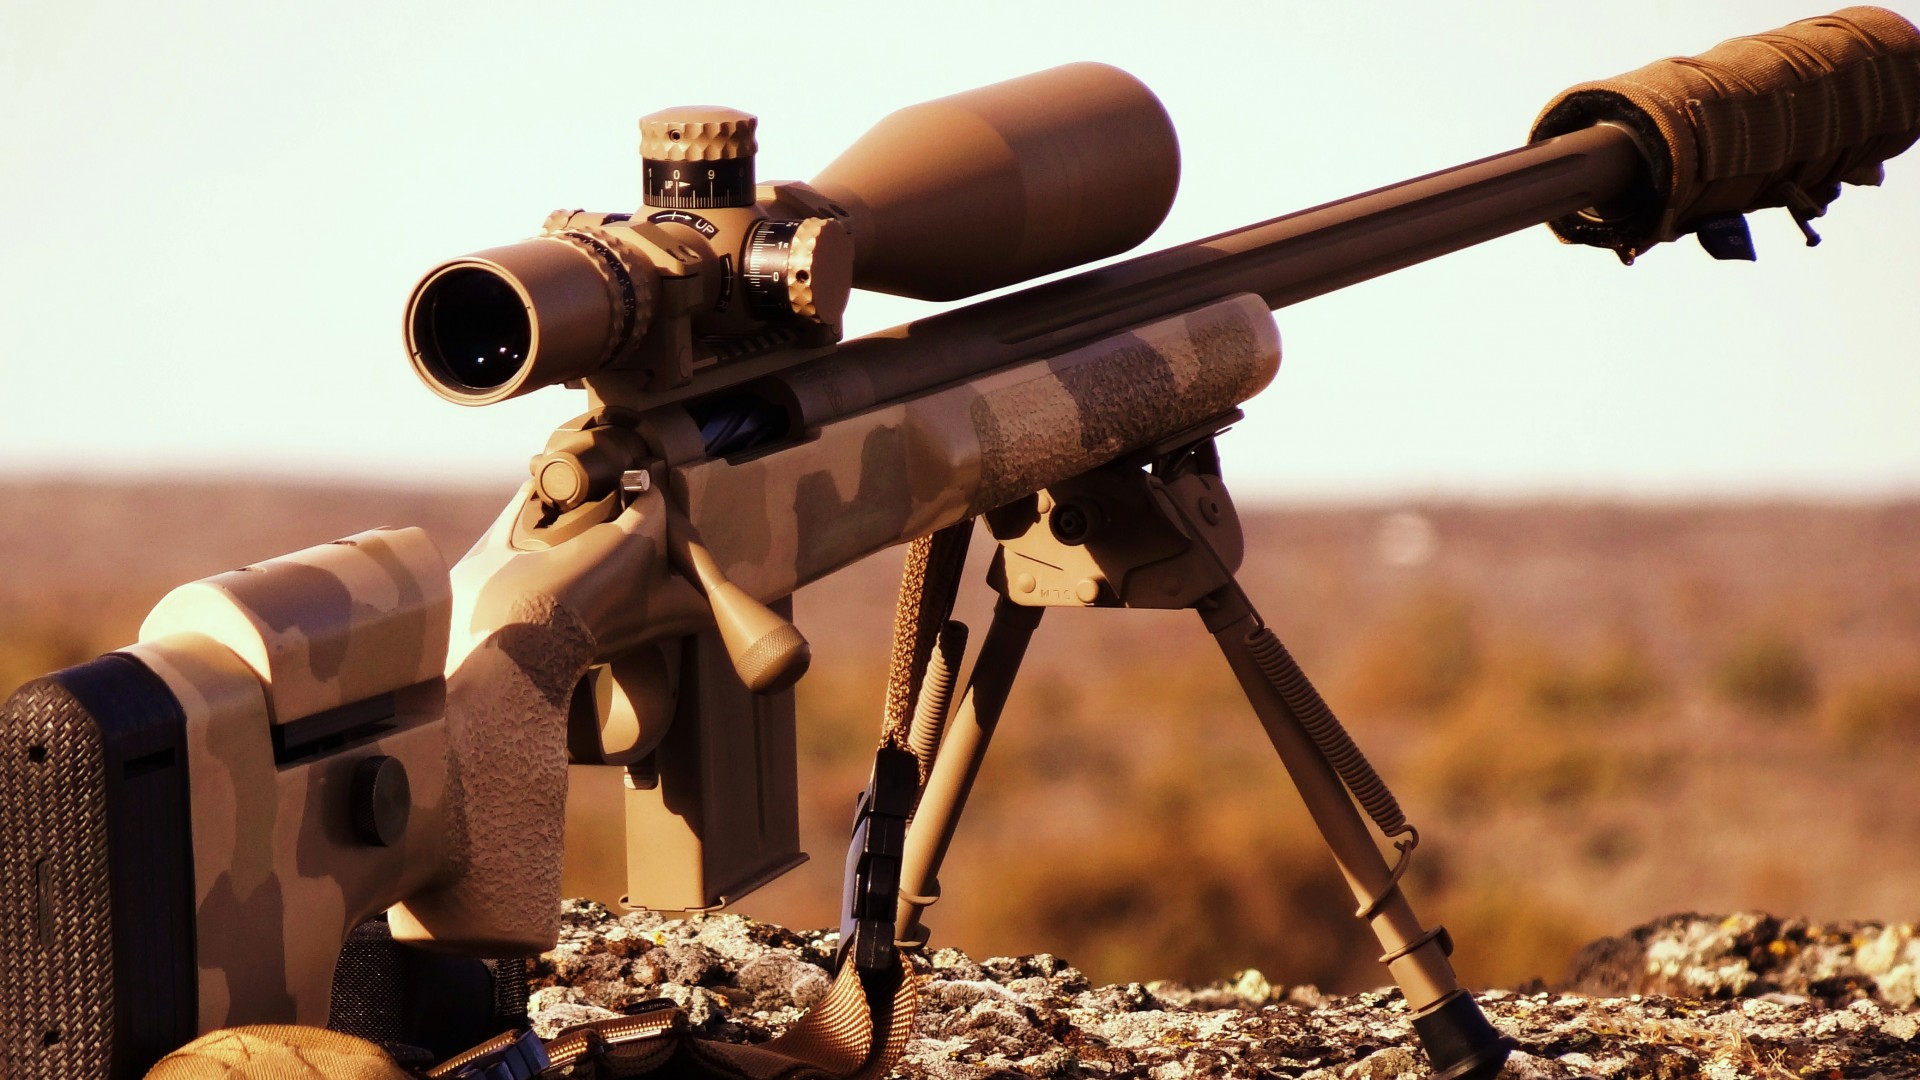 винтовка, АР-15, камуфляж, глушитель, AR-15, AR-15, rifle, custom, semi-automatic, multicam, silencer, scope (horizontal)